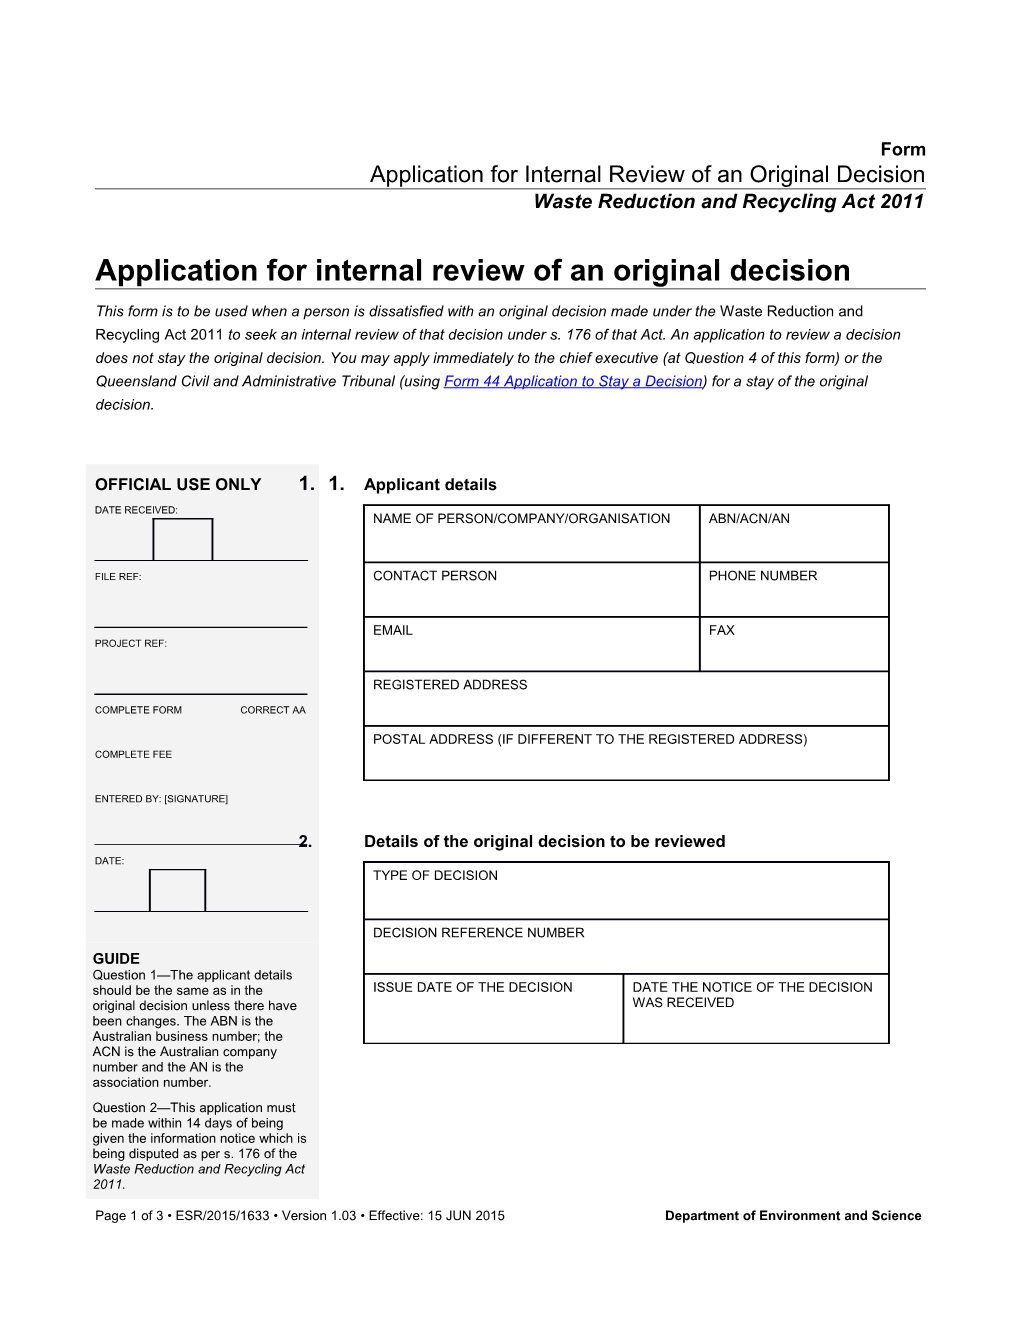 Application for an Internal Review of an Original Decision